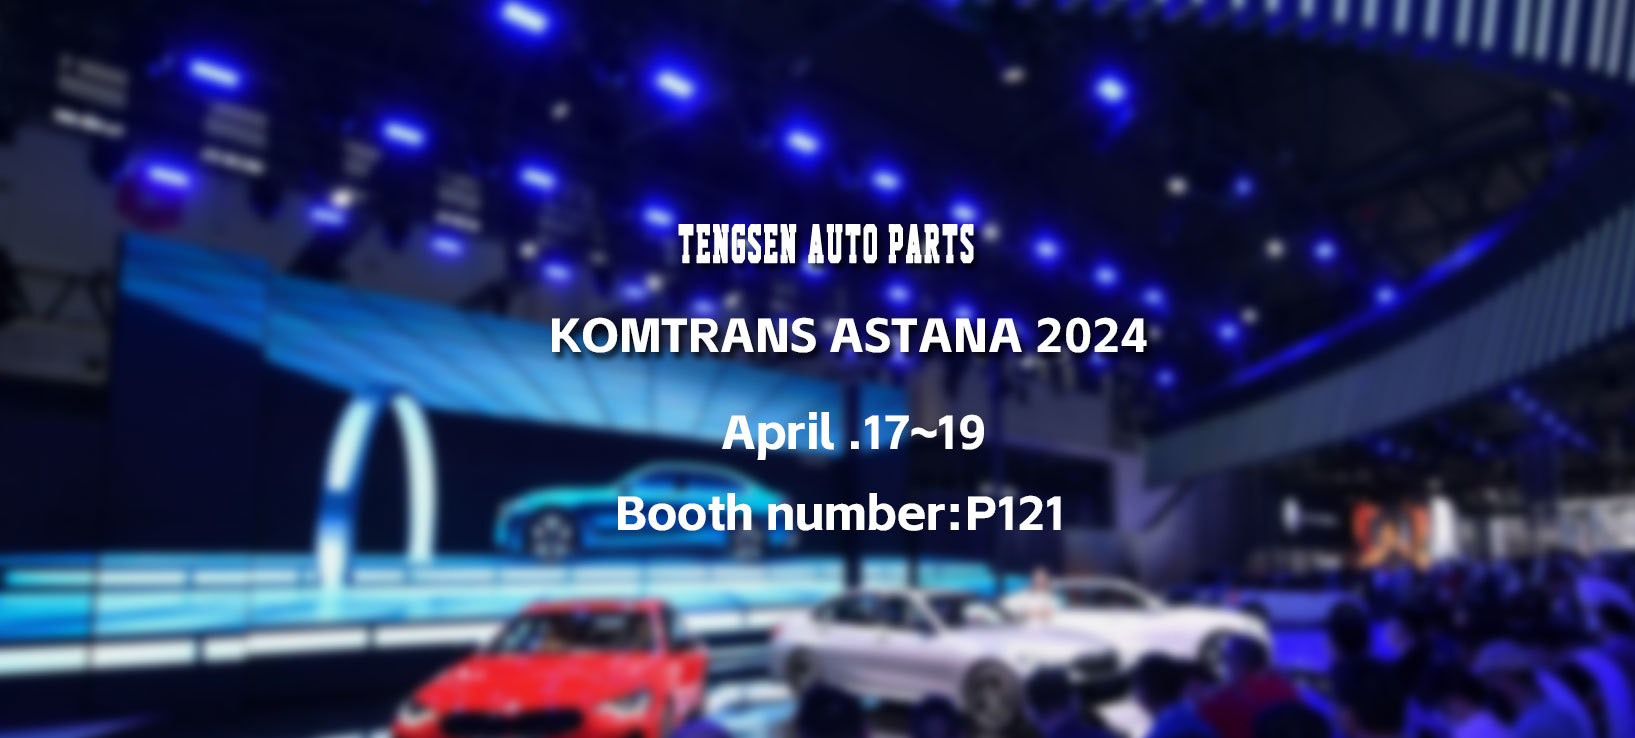 Automechanika Astana 2024 Tengsen Auto Parts participates in Automechanika Astana